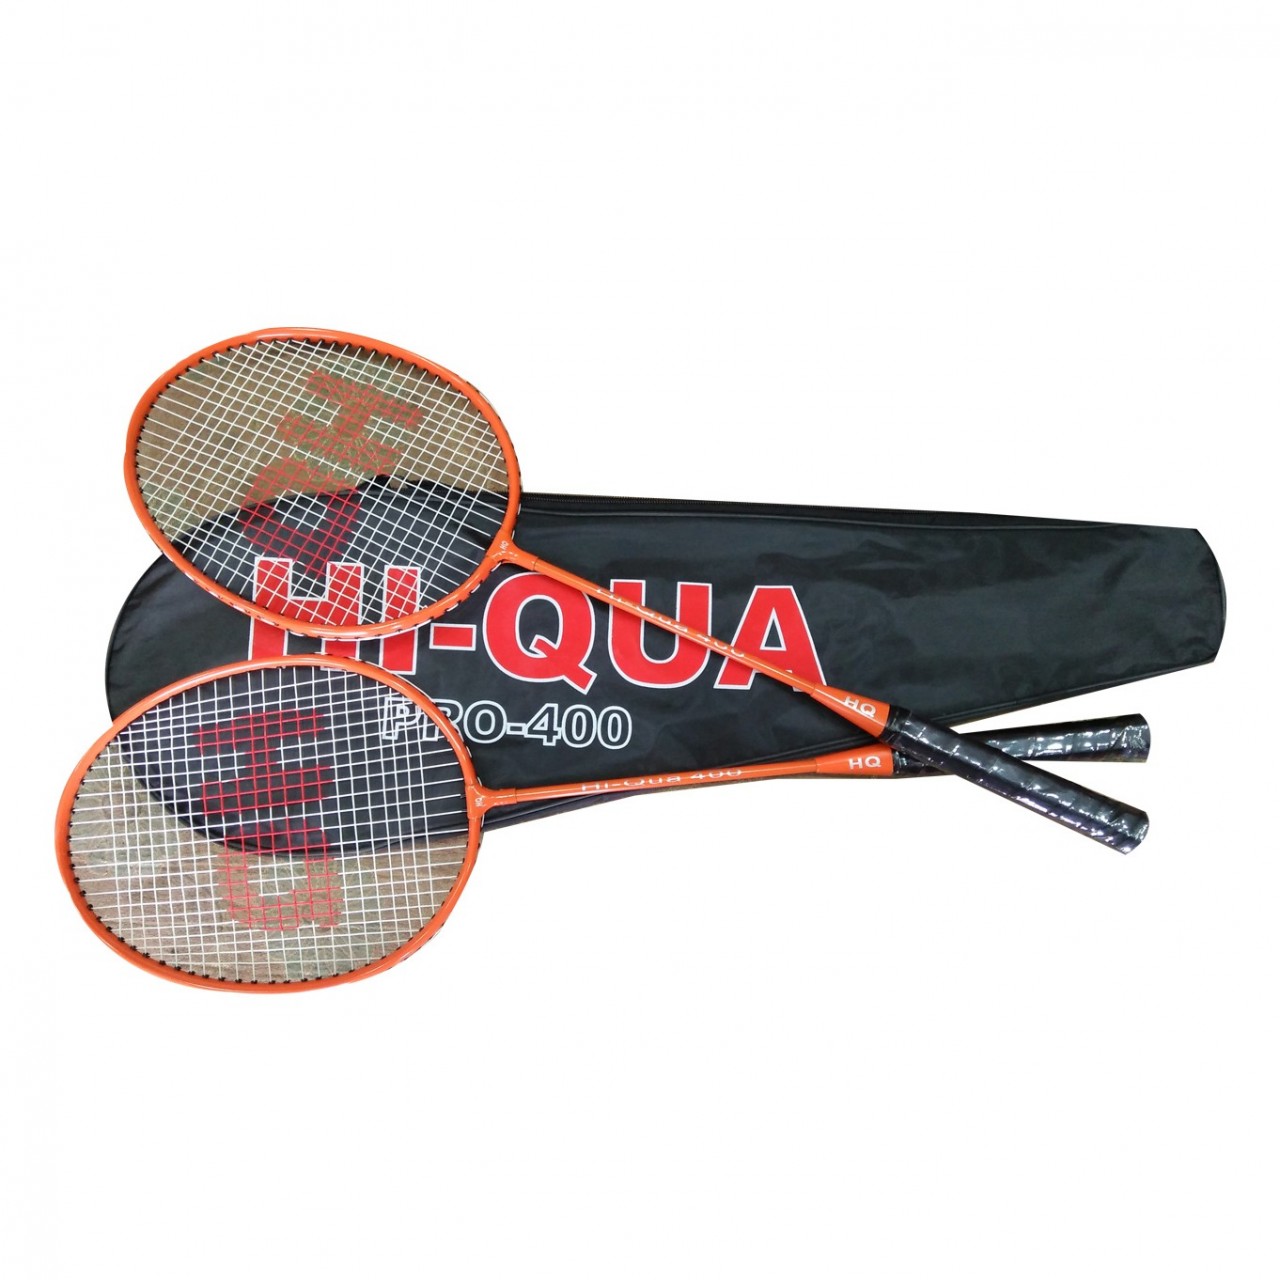 Reviews of Hi Qua Pro-400 Badminton Racket - Orange Online Shopping in Pakistan Customer Review